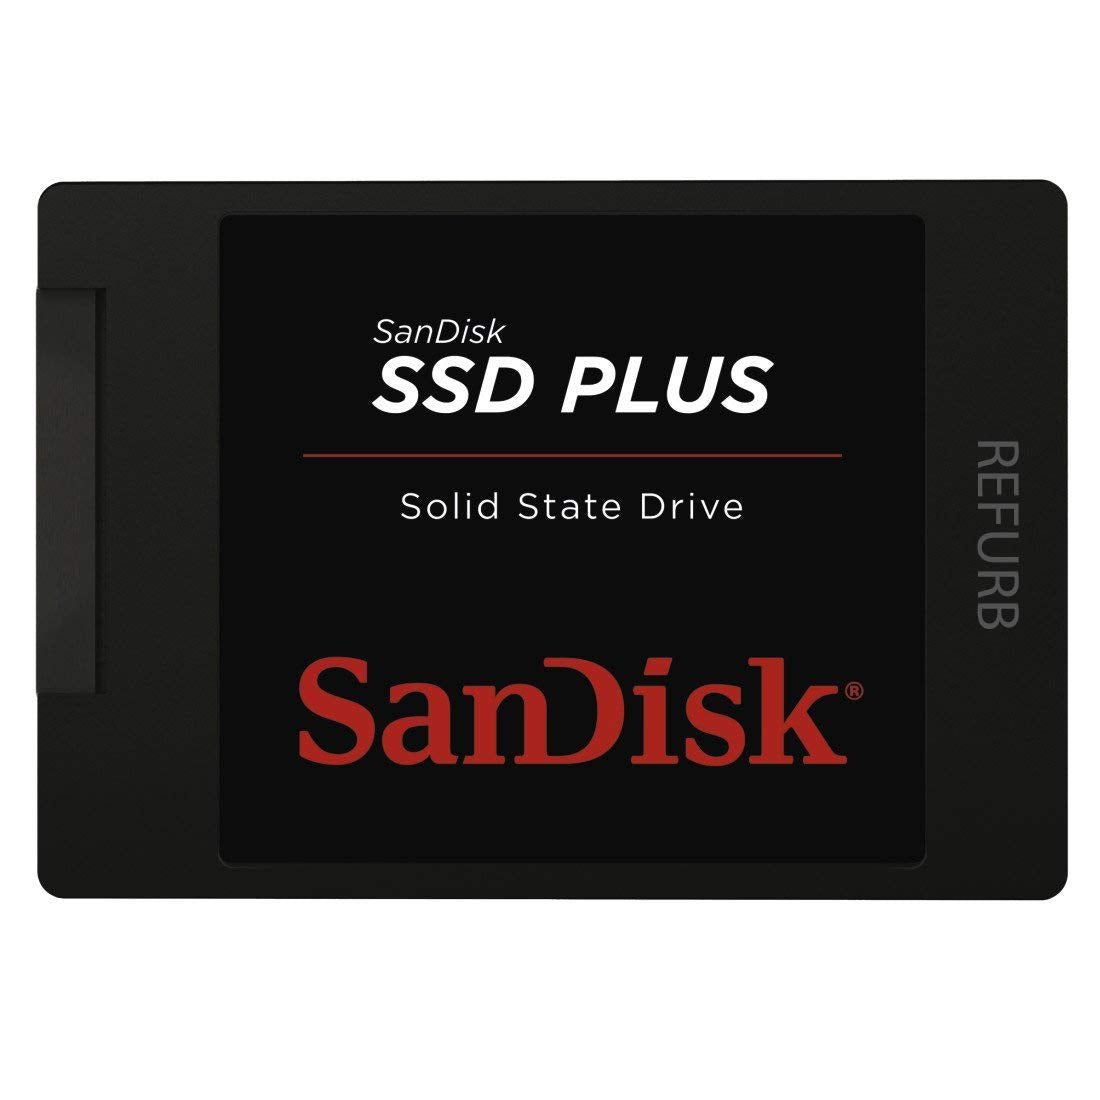 SanDisk SSD PLUS 240GB SSD Solid State Drive SDSSDA-240G-G25 (Certified Refurbished)